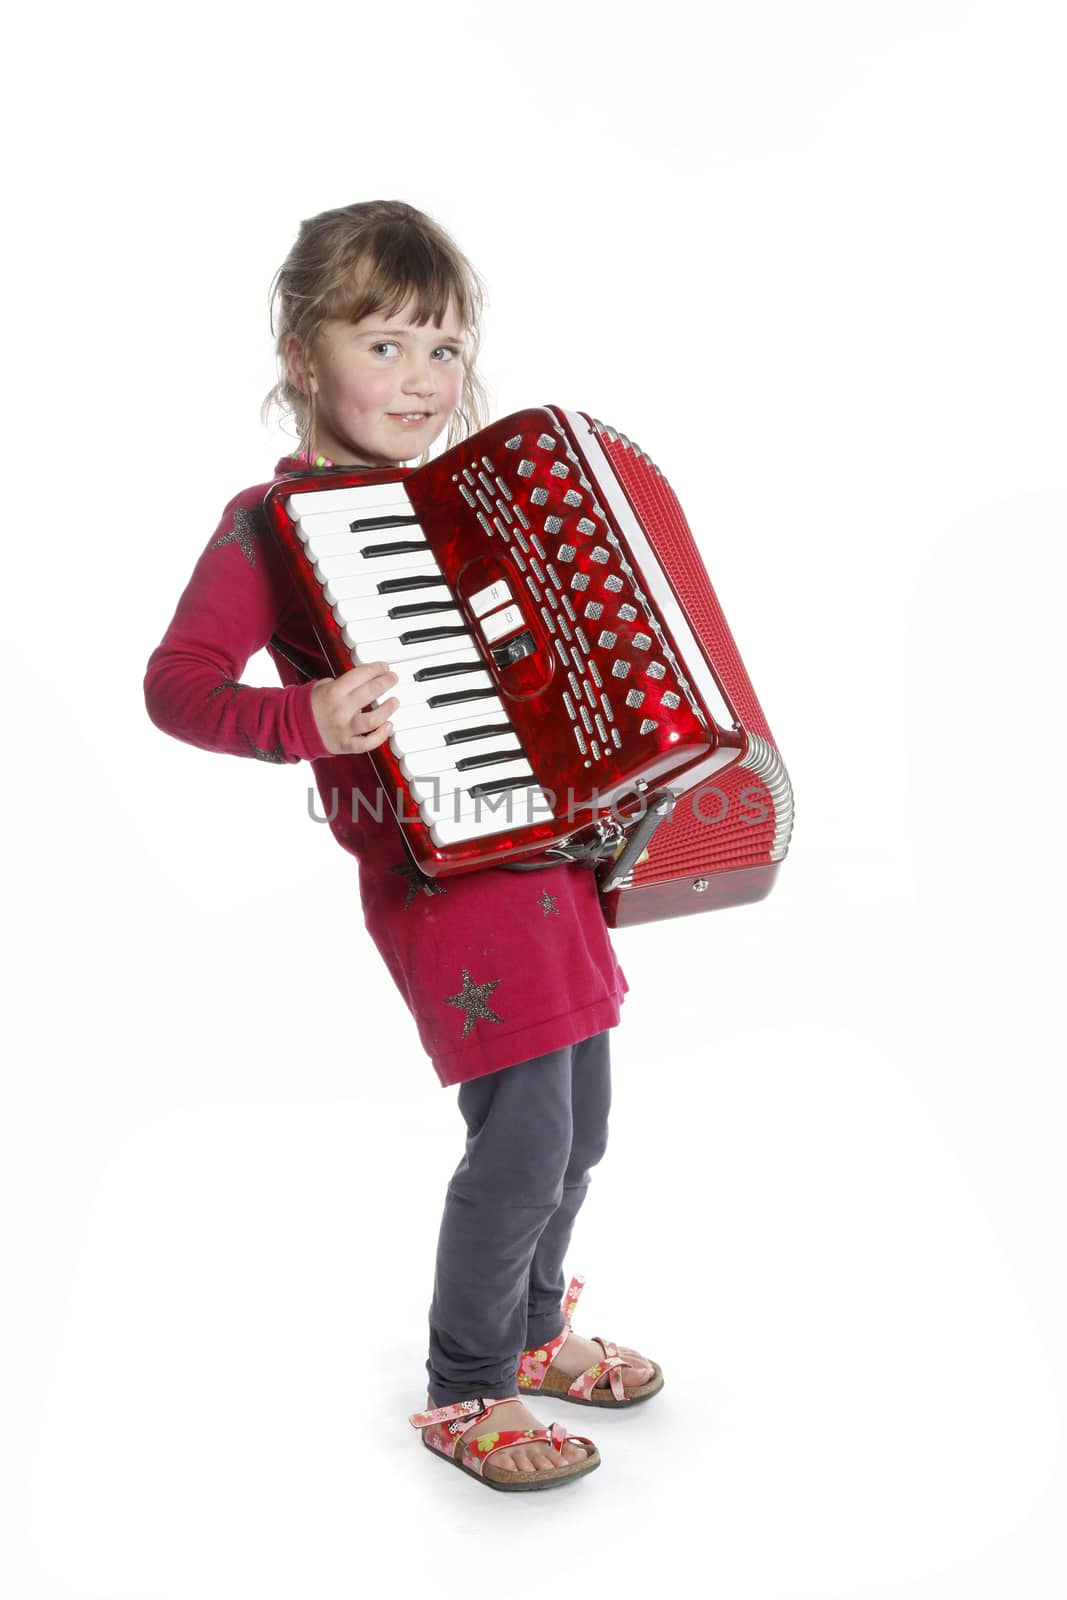 very young girl with accordion in studio by ahavelaar